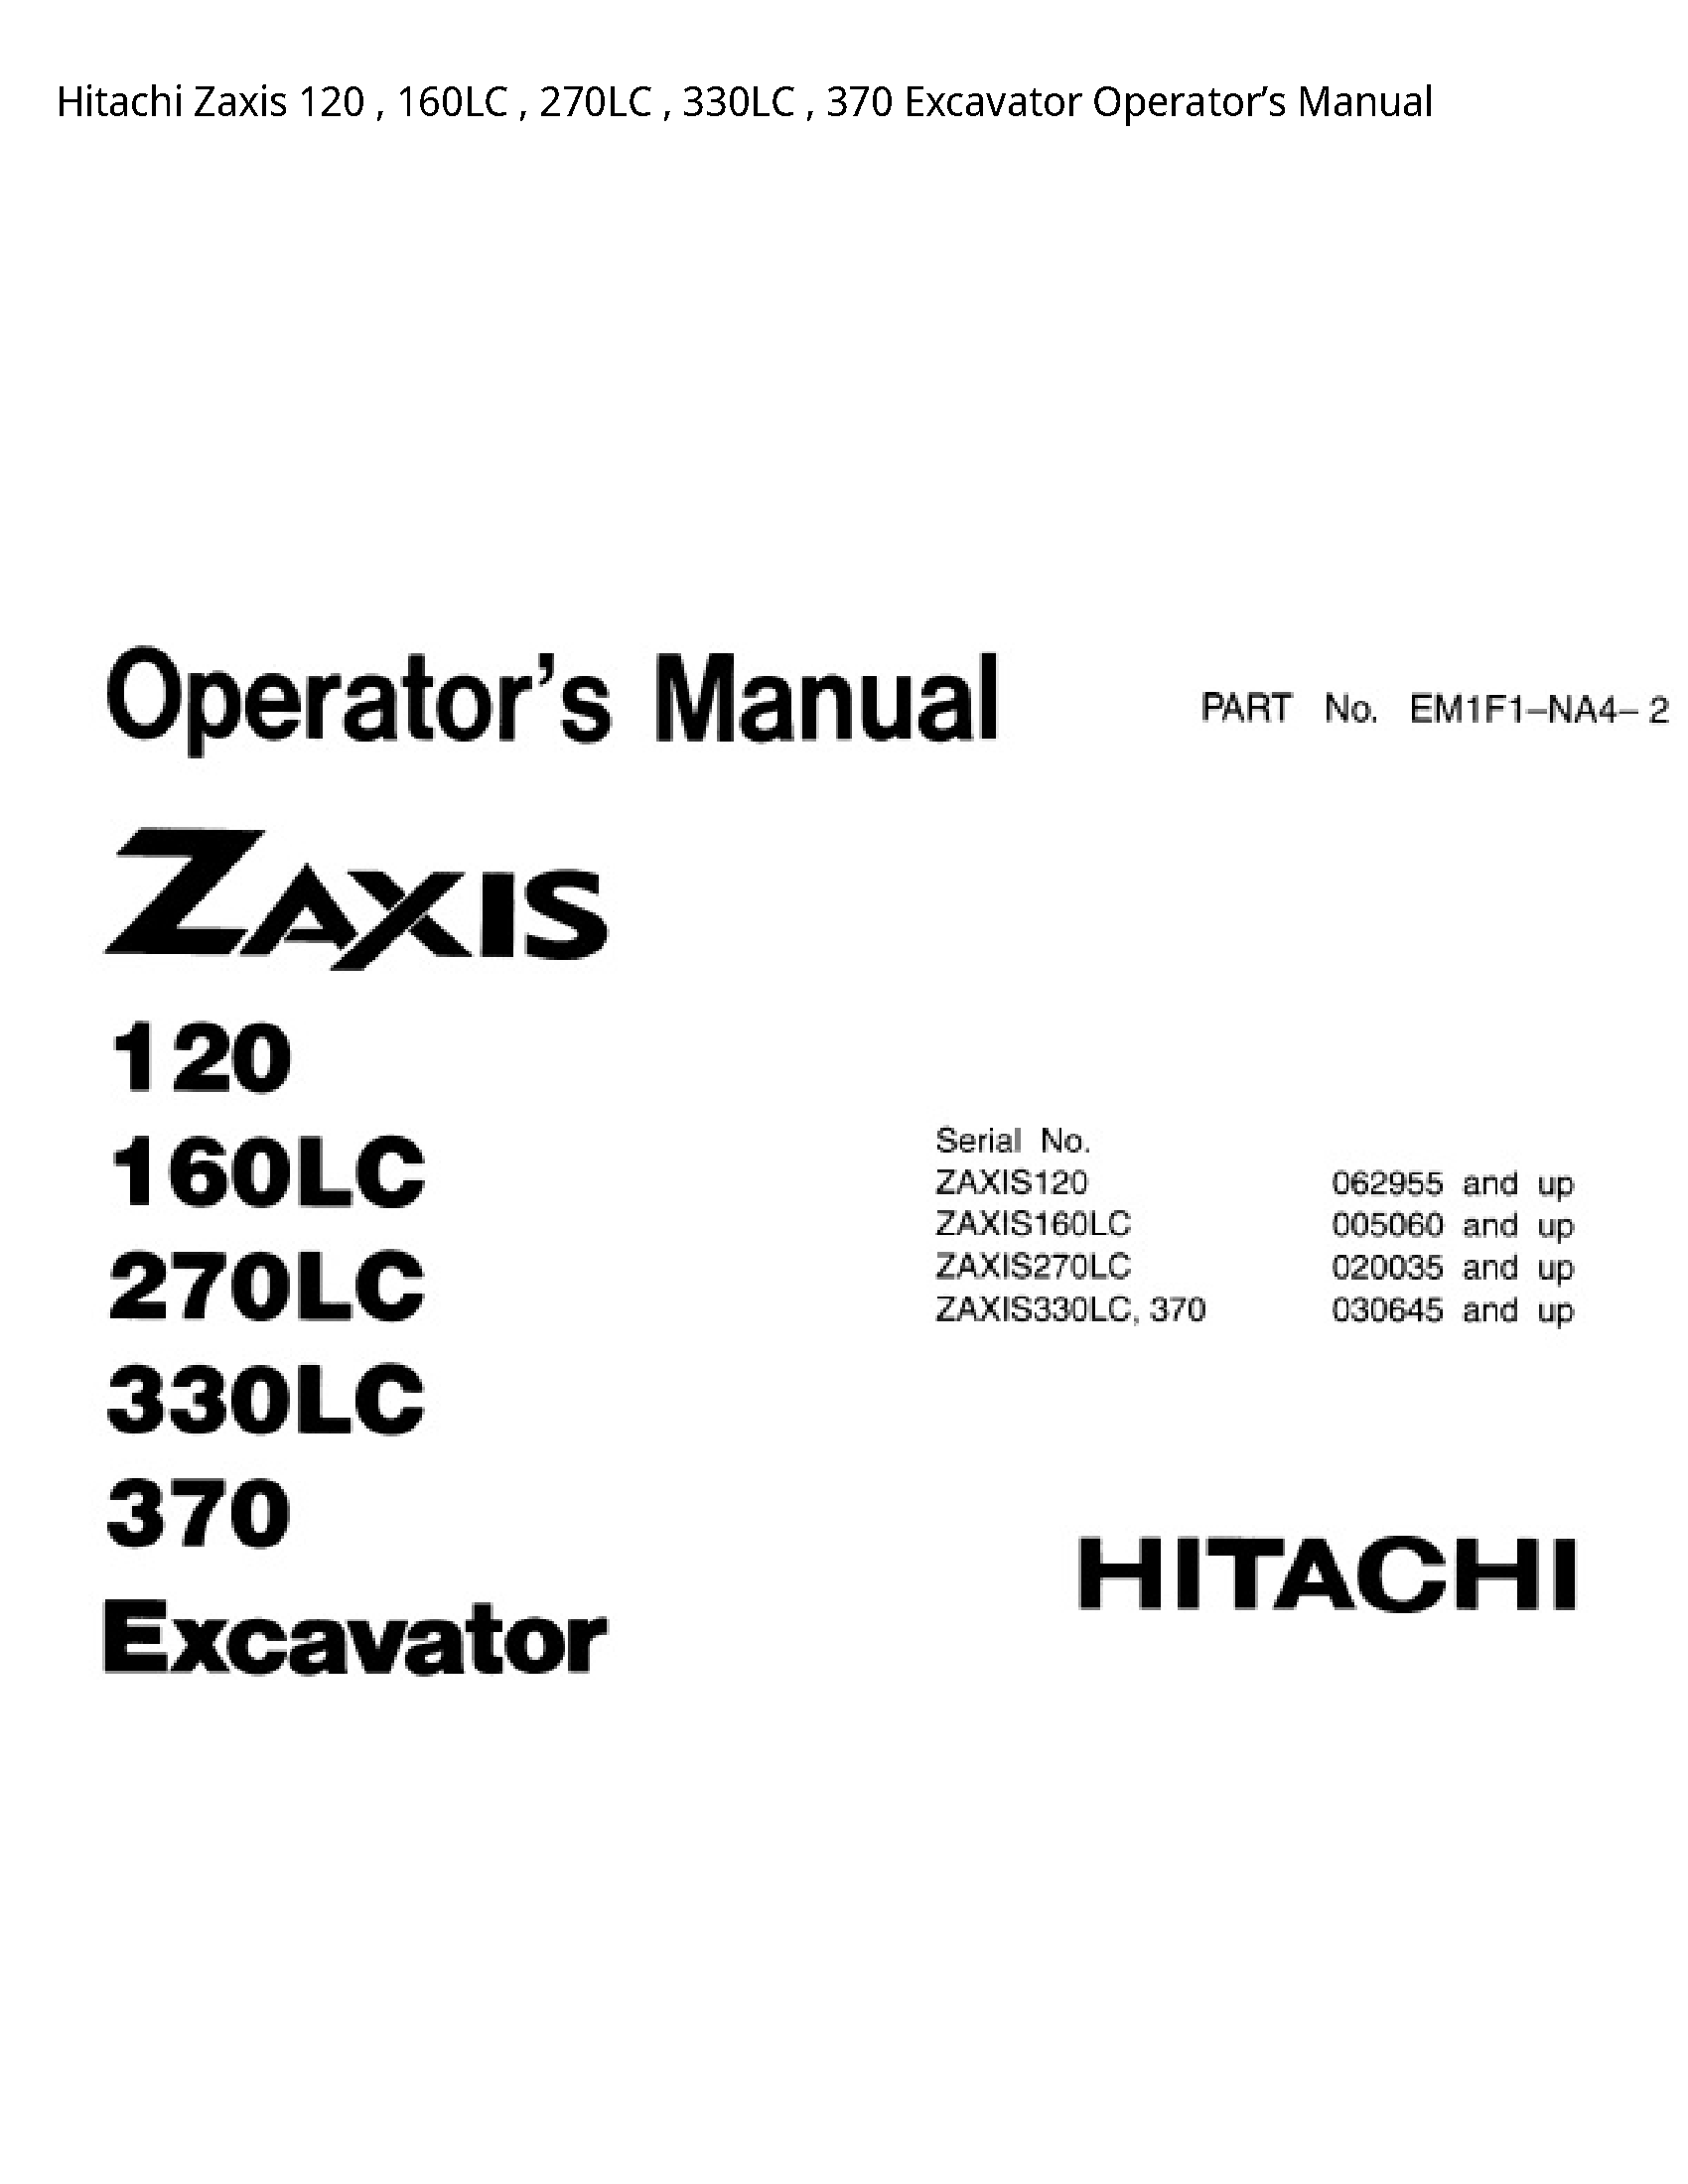 Hitachi 120 Zaxis Excavator Operator’s manual